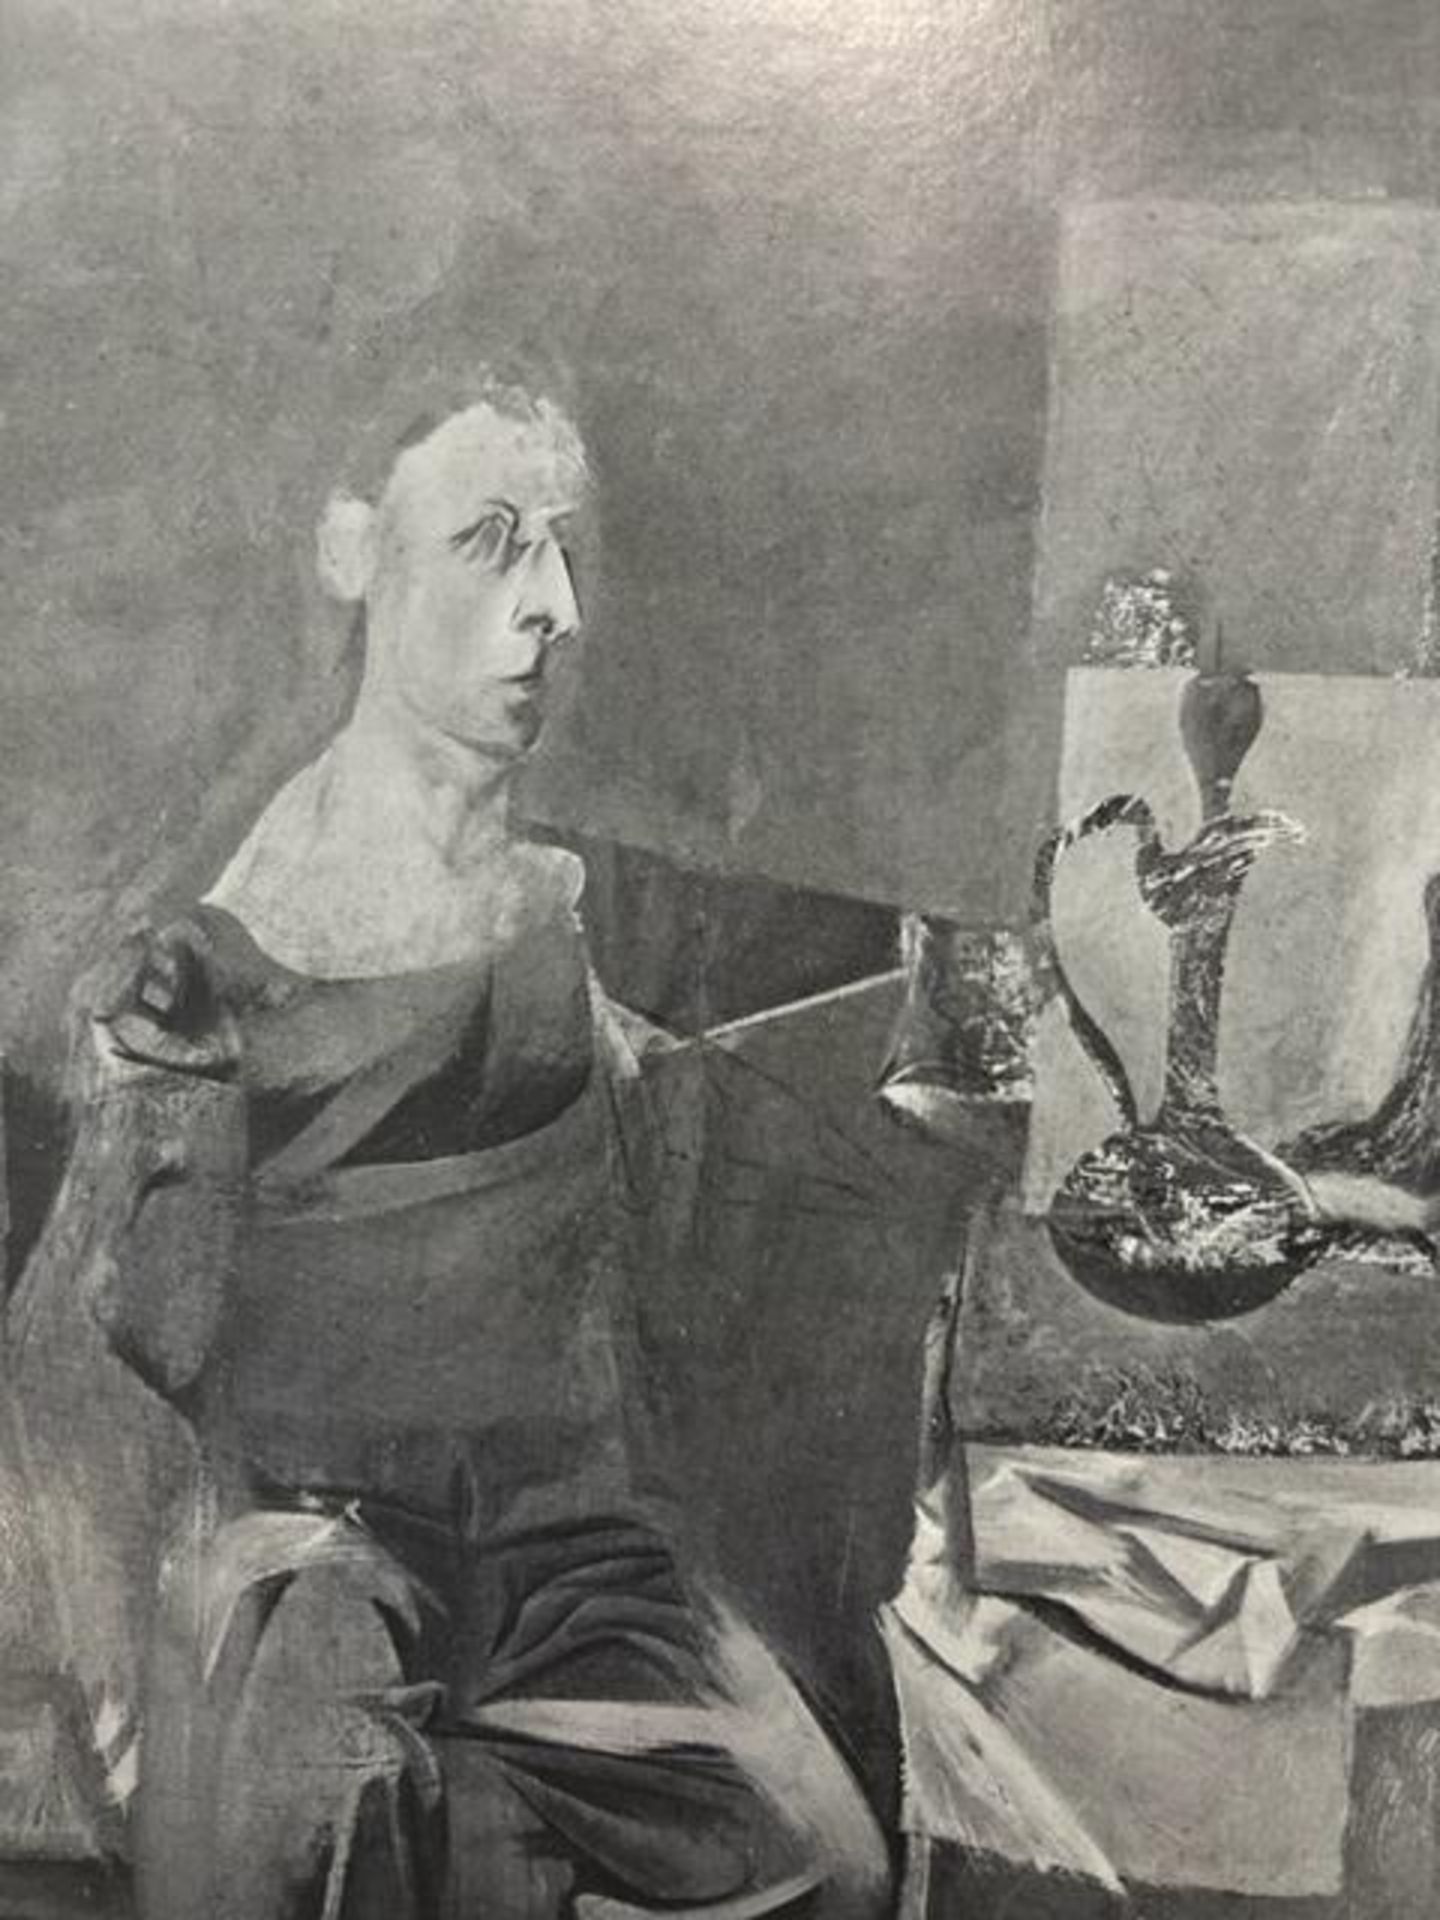 Willem de Kooning "Glazier" Print. - Image 2 of 6